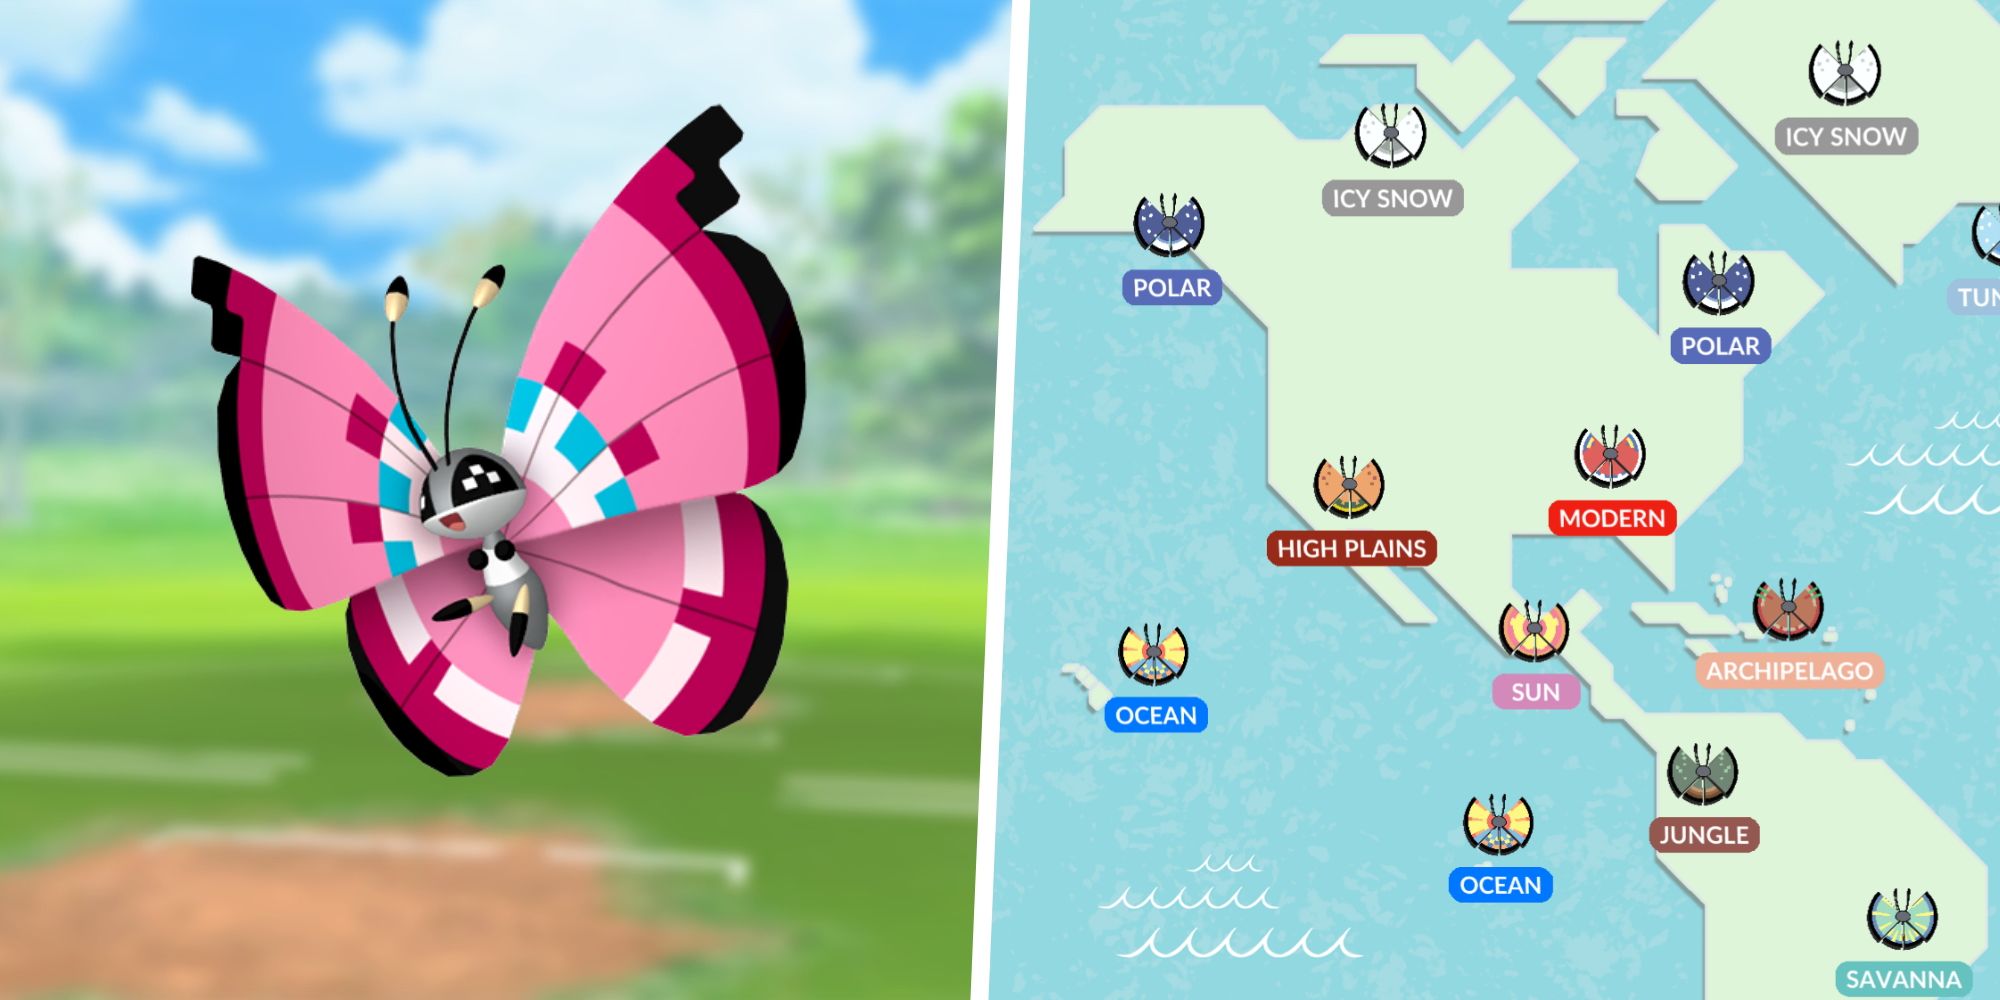 Image of Vivillon from Pokemon split with a map of Vivillon's regional patterns